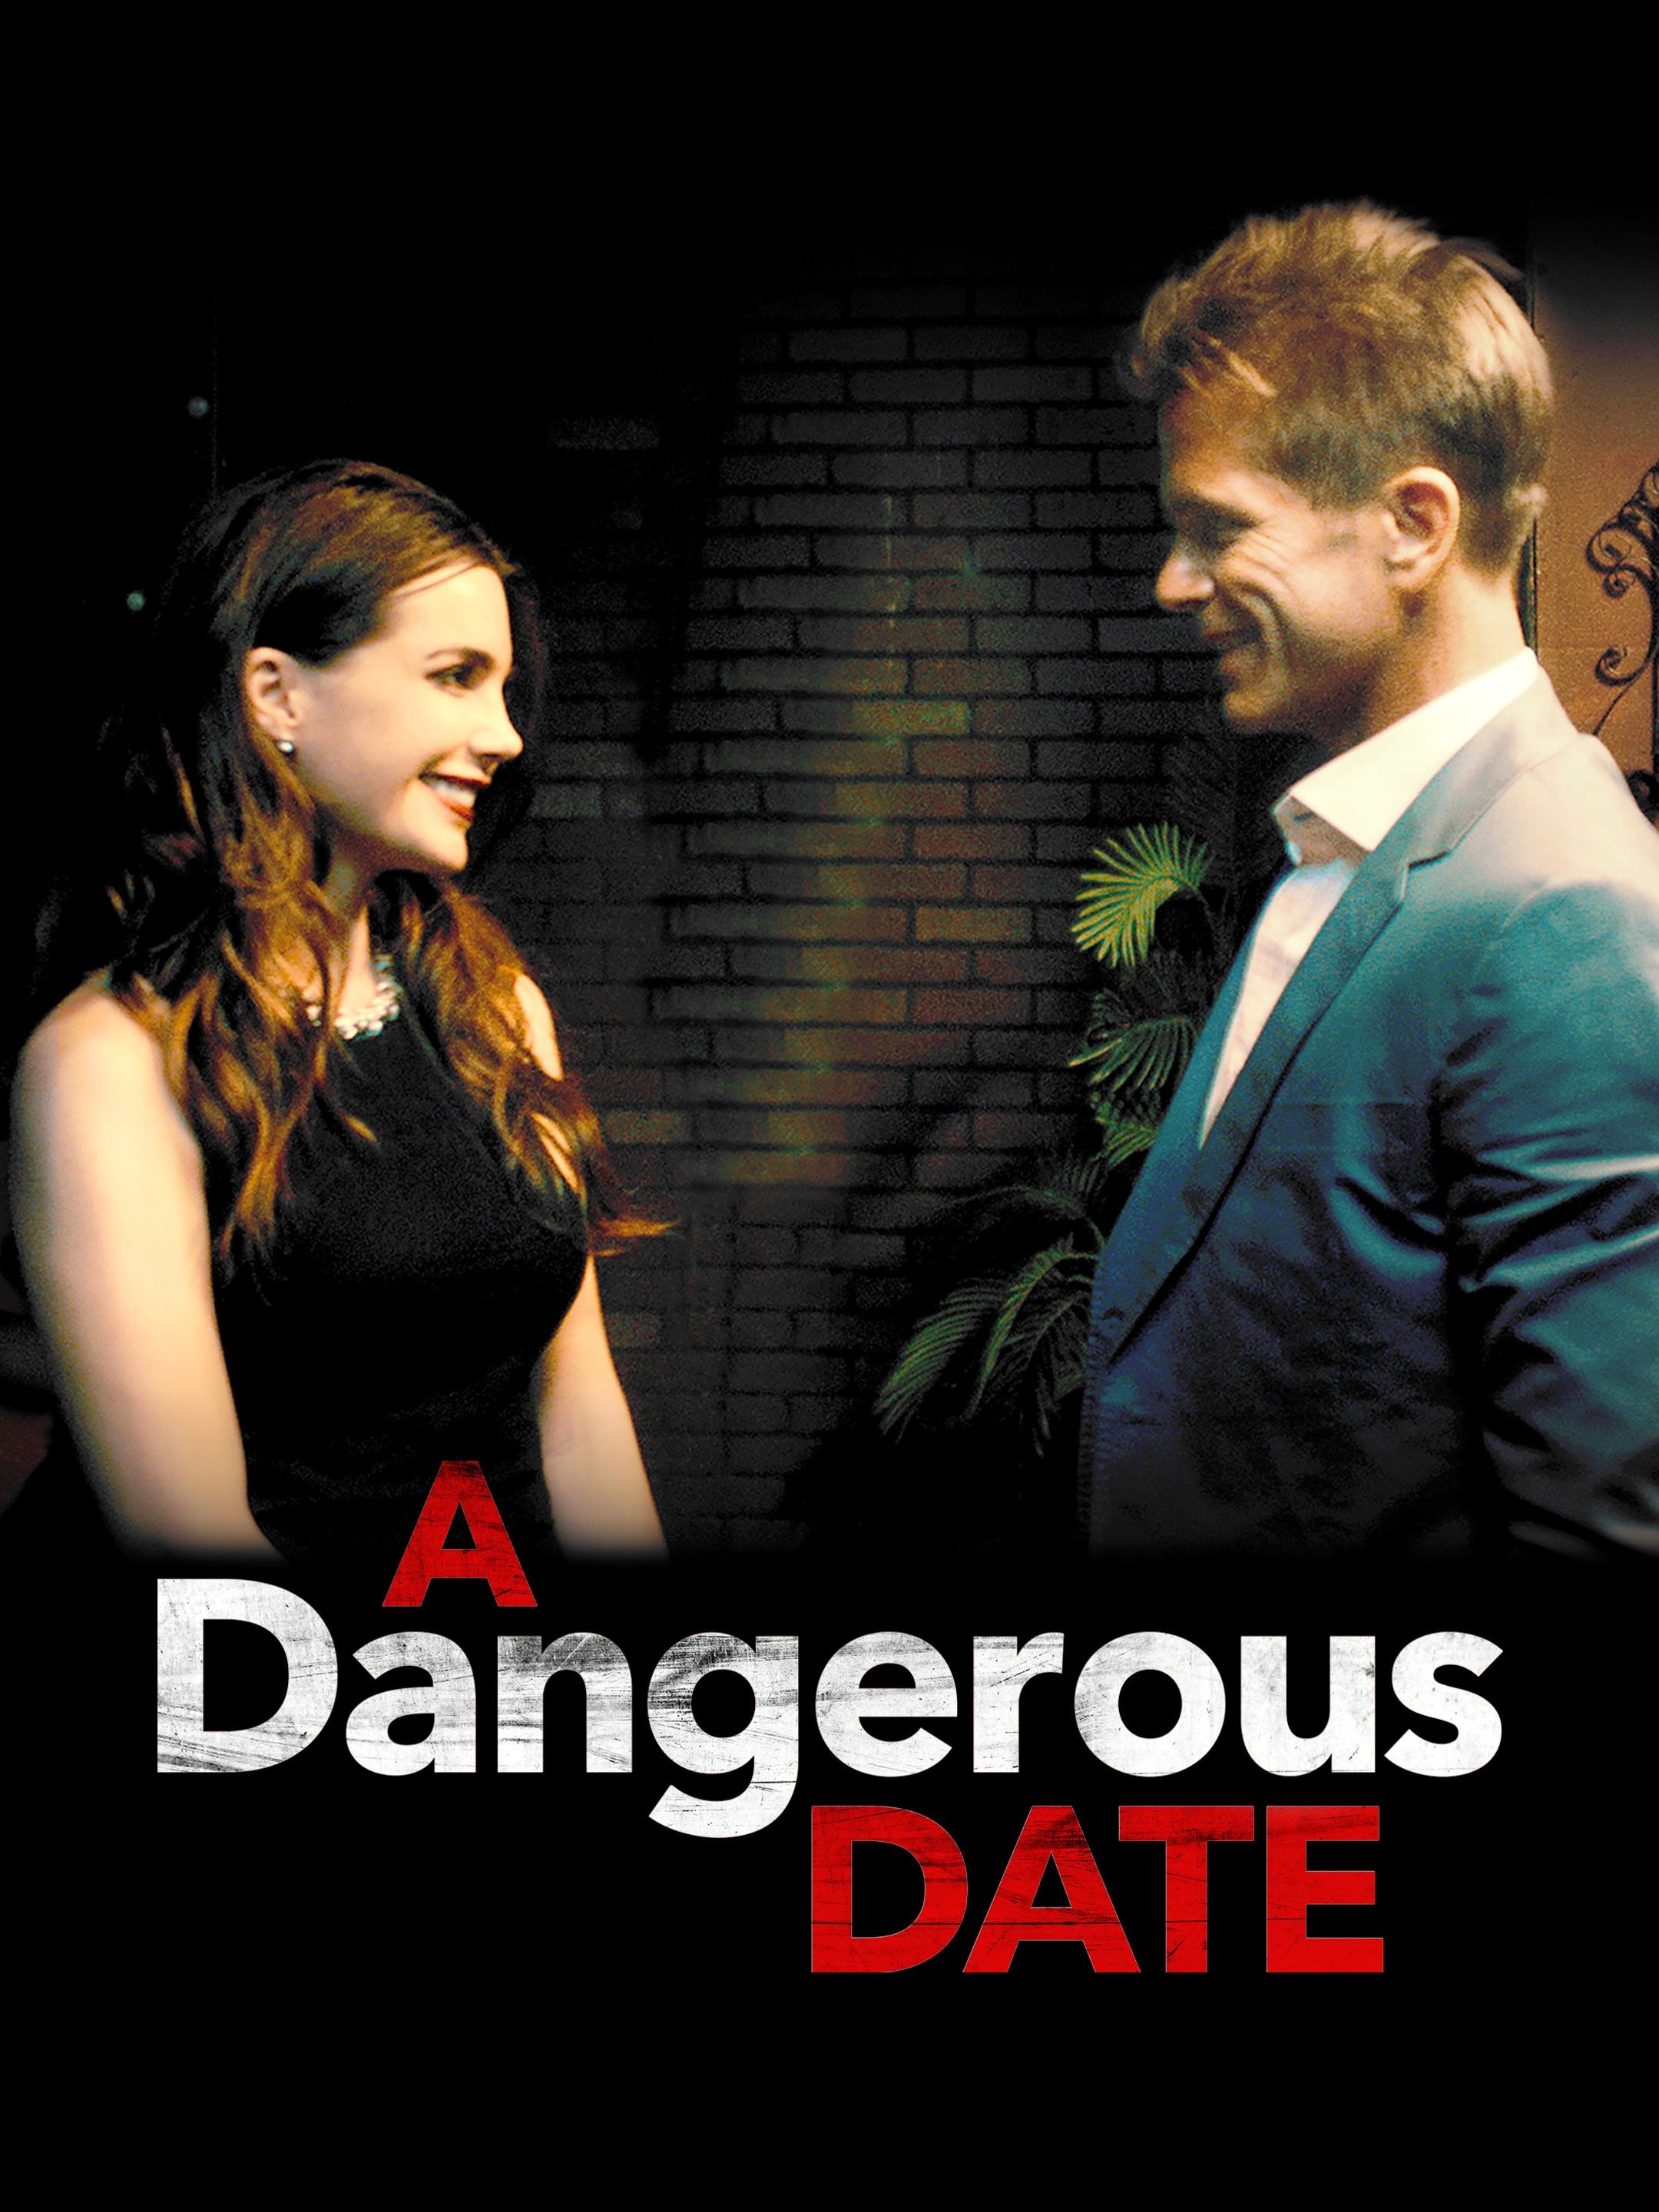 A dangerous date